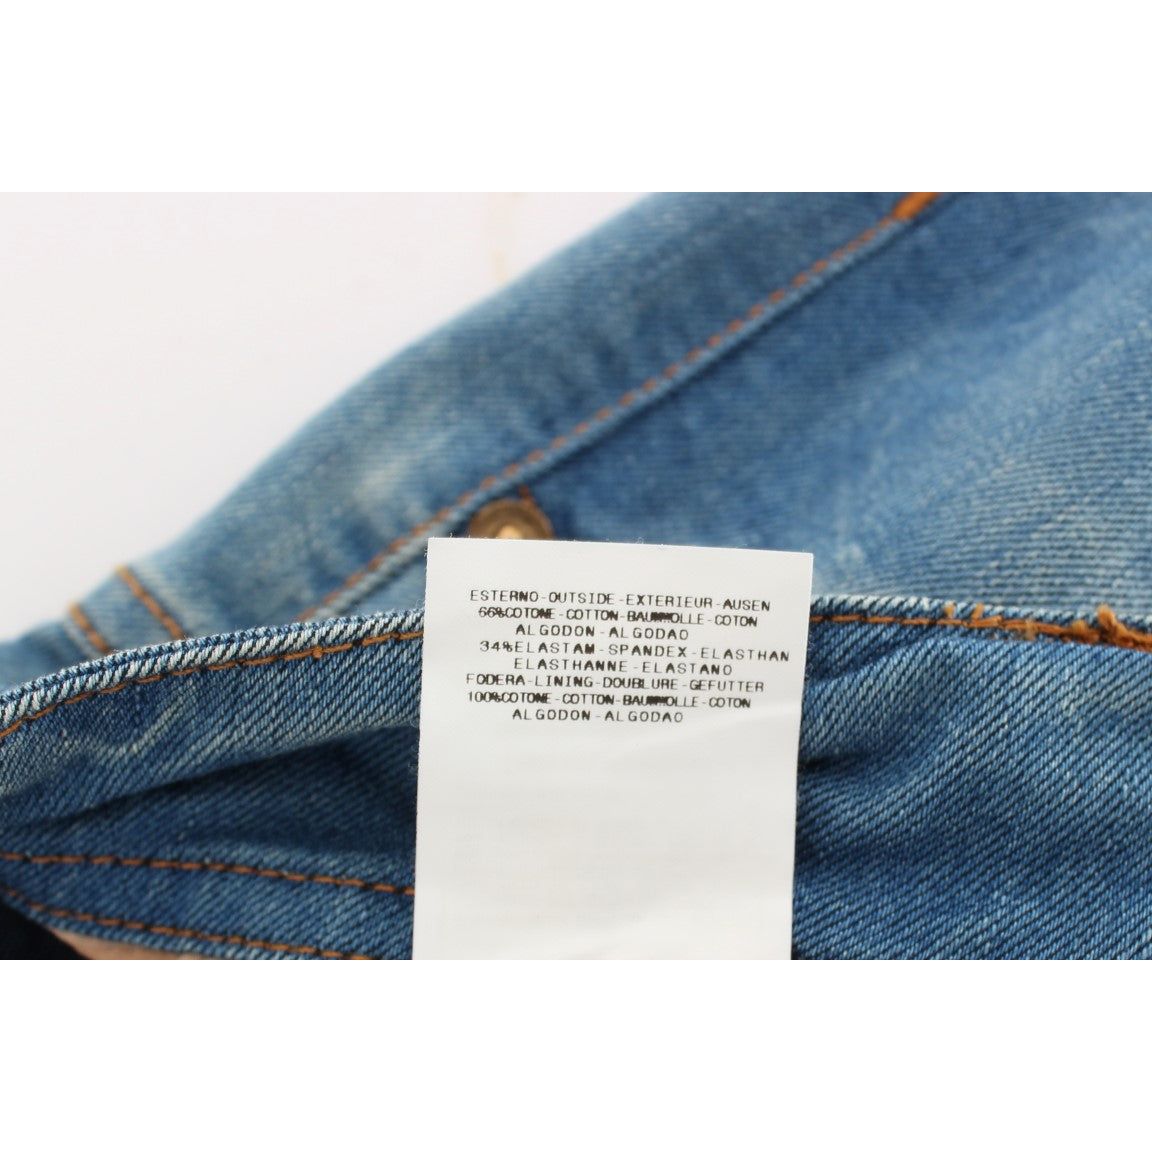 John Galliano Sleek Blue Slim Fit Designer Jeans blue-wash-cotton-blend-slim-fit-jeans-1 329905-blue-wash-cotton-blend-slim-fit-jeans-4-7.jpg